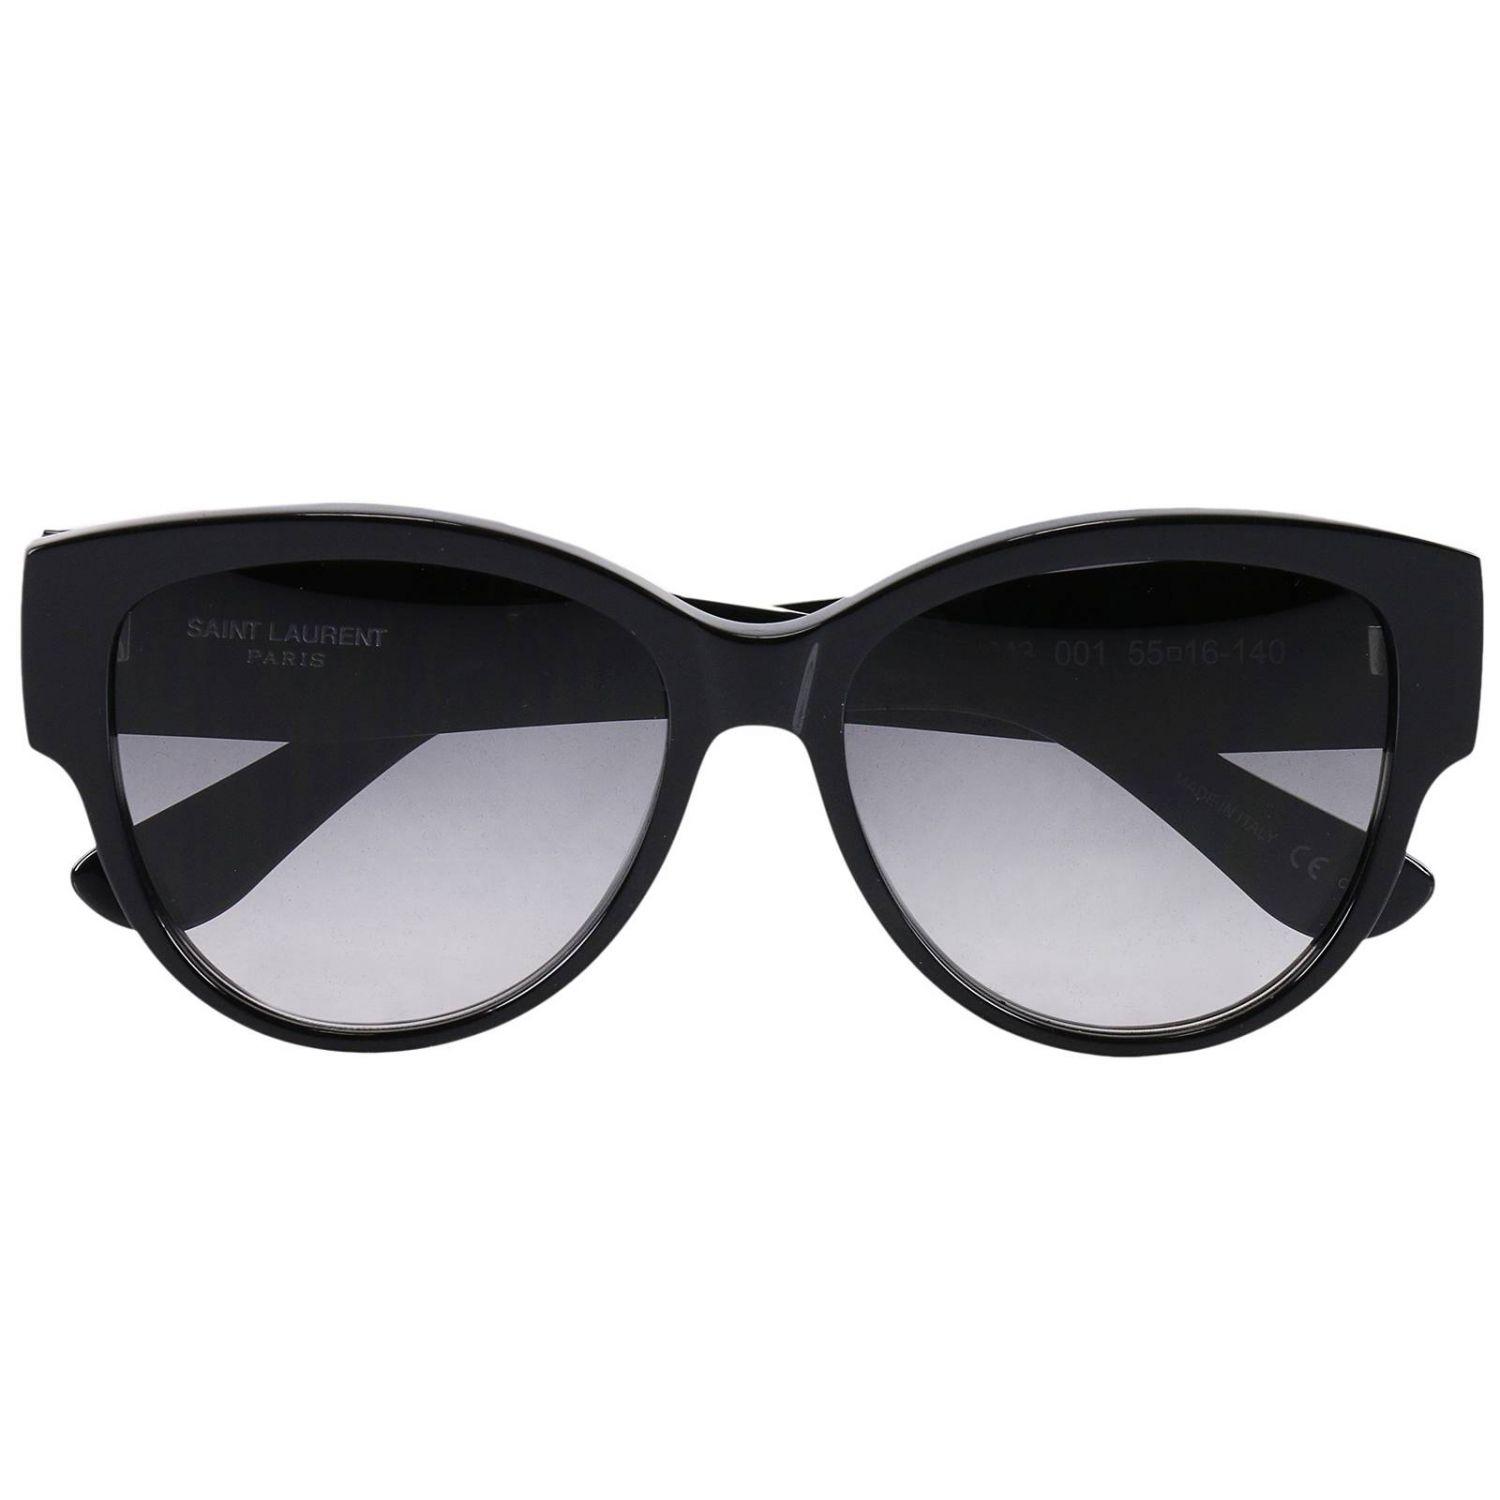 Lyst - Saint Laurent Sunglasses Eyewear Women in Black